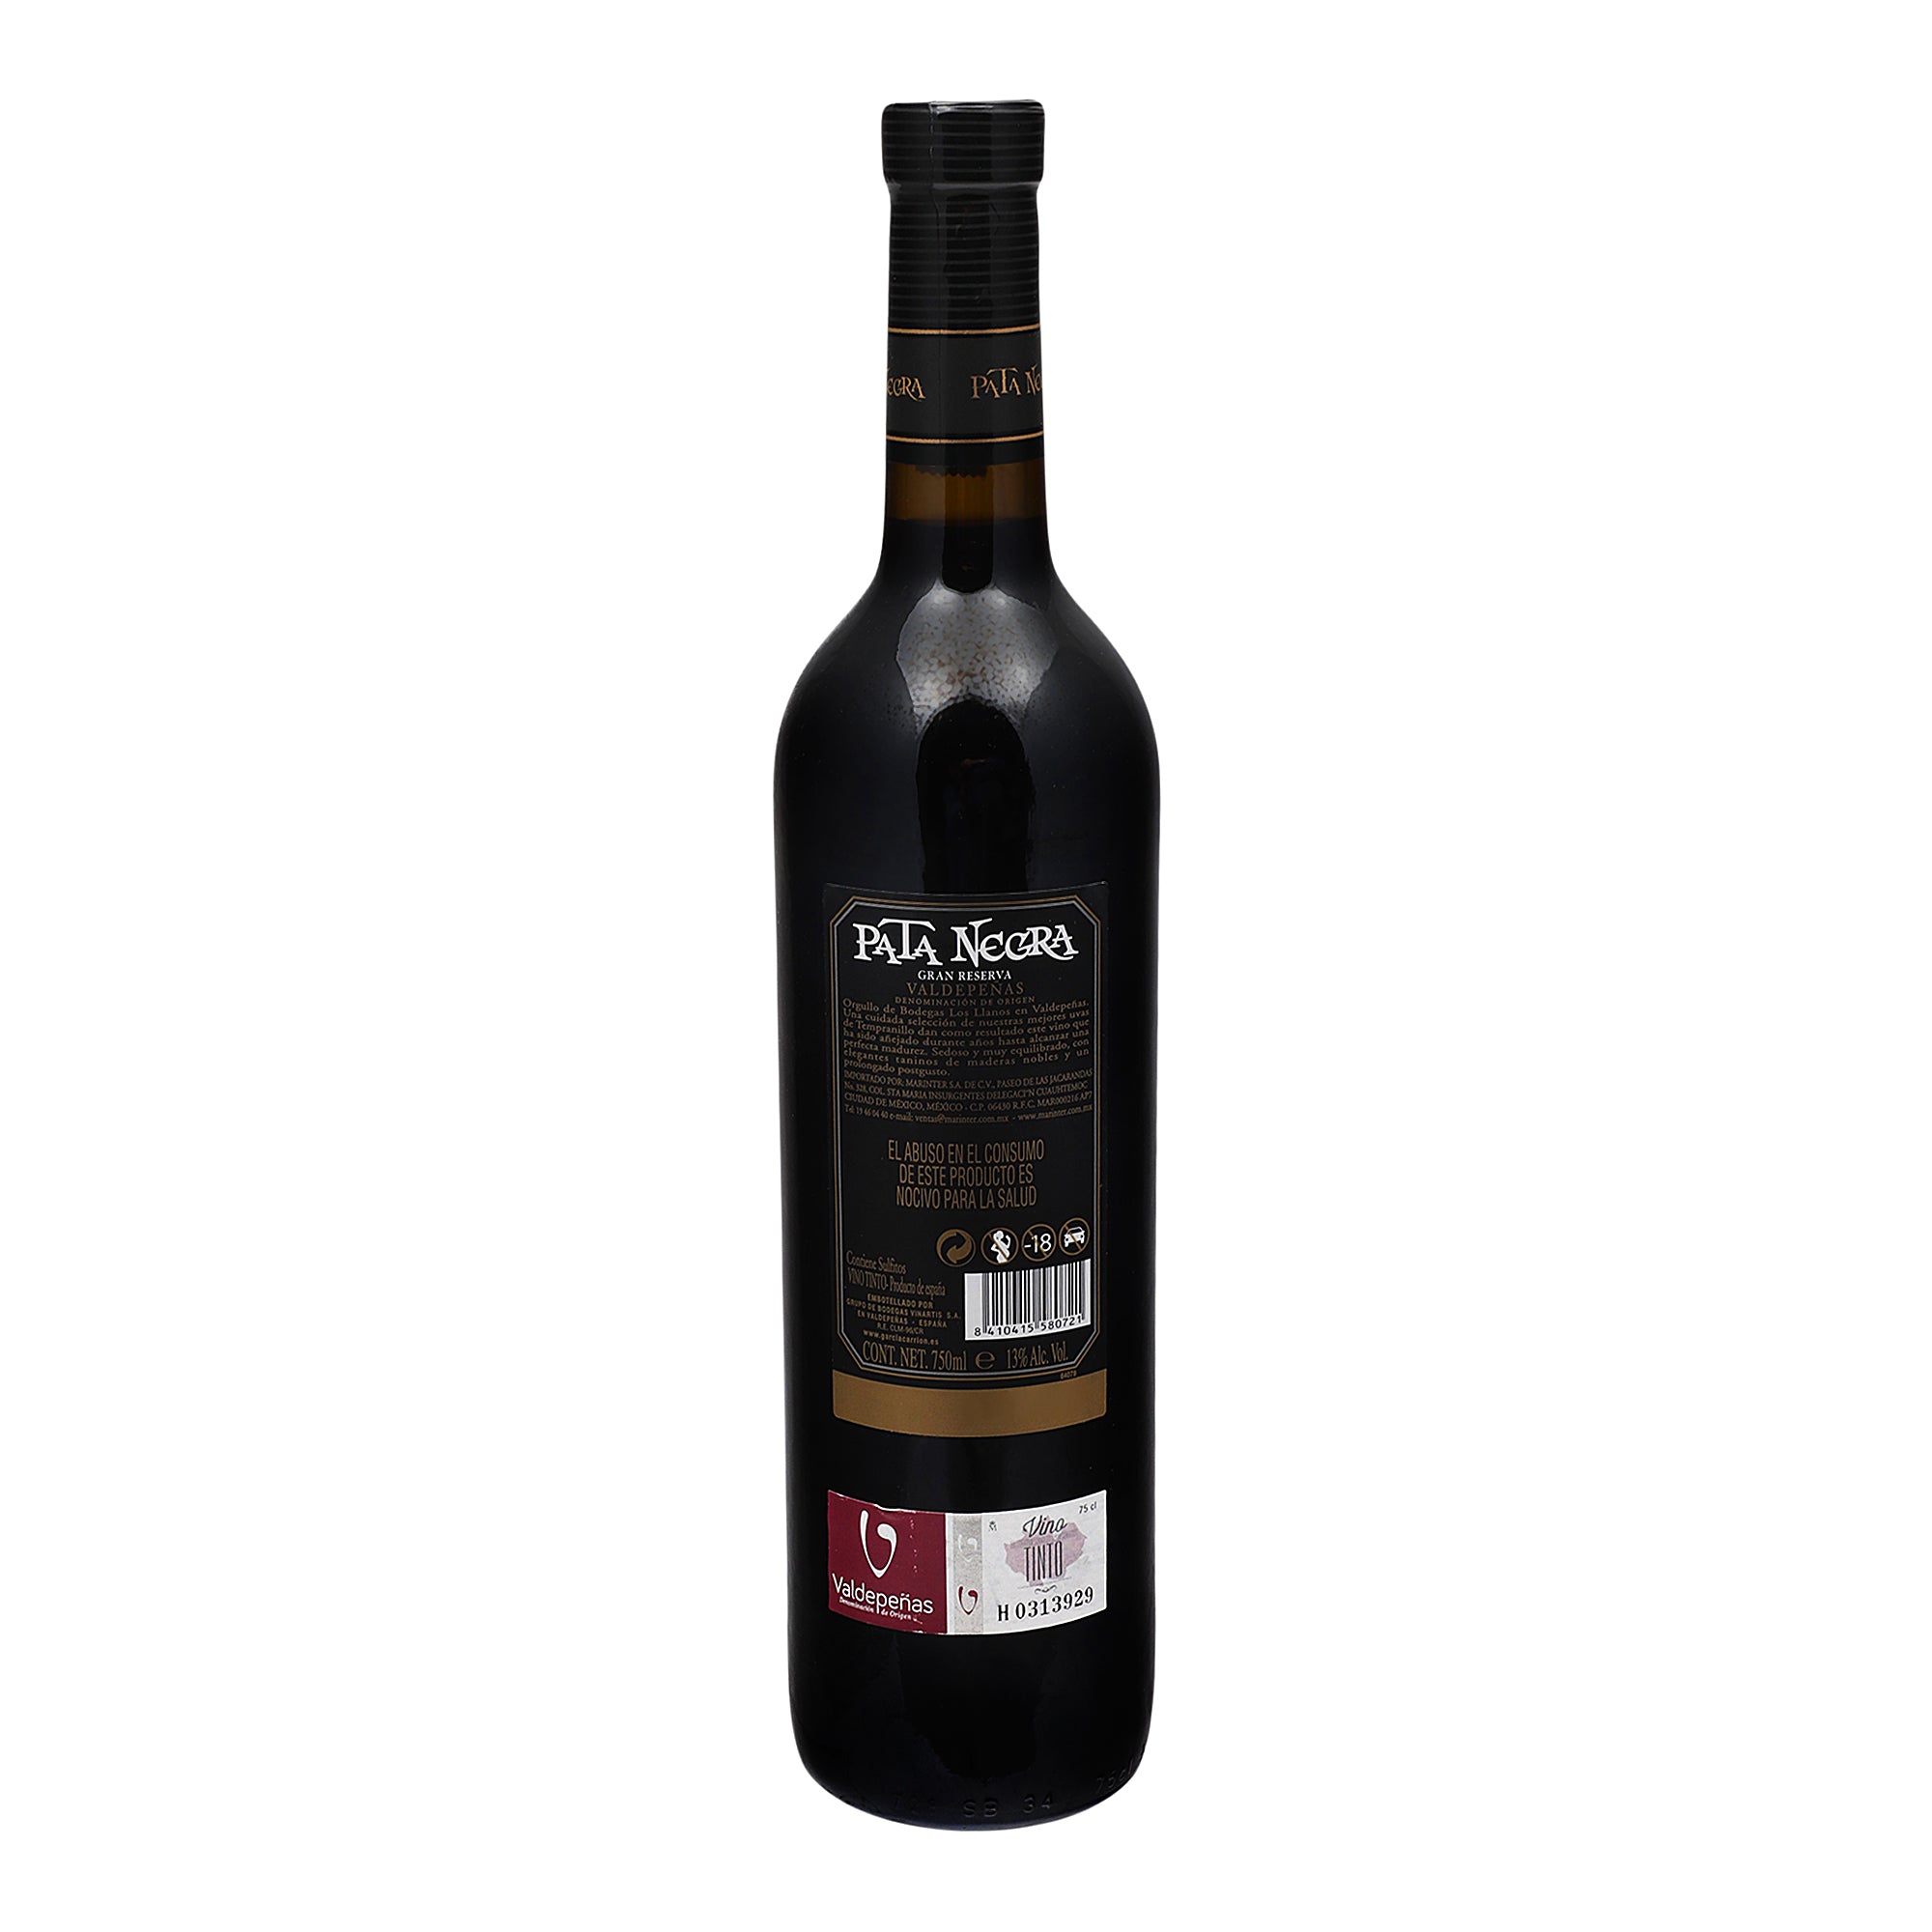 Vino tinto - Pata Negra Valdepeñas Gran Reserva - 750 ml